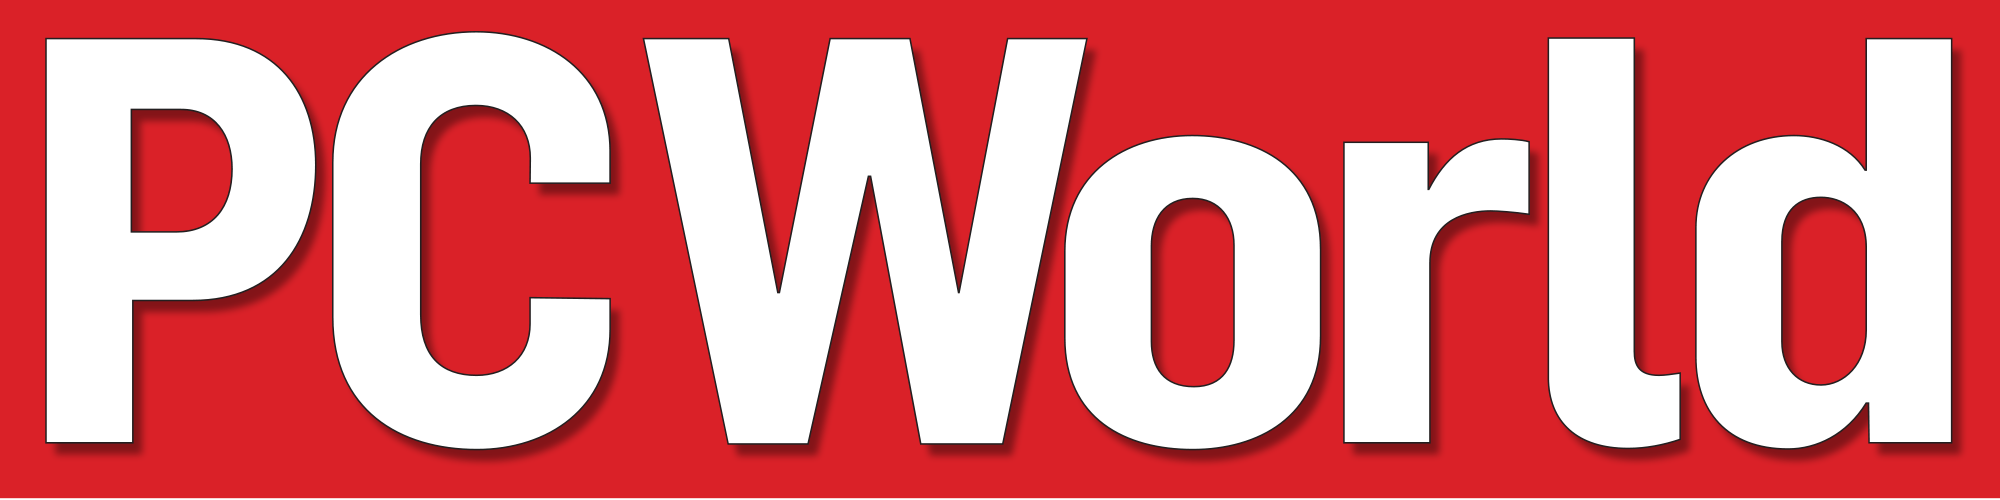 PC World Logo - PC World logo.svg